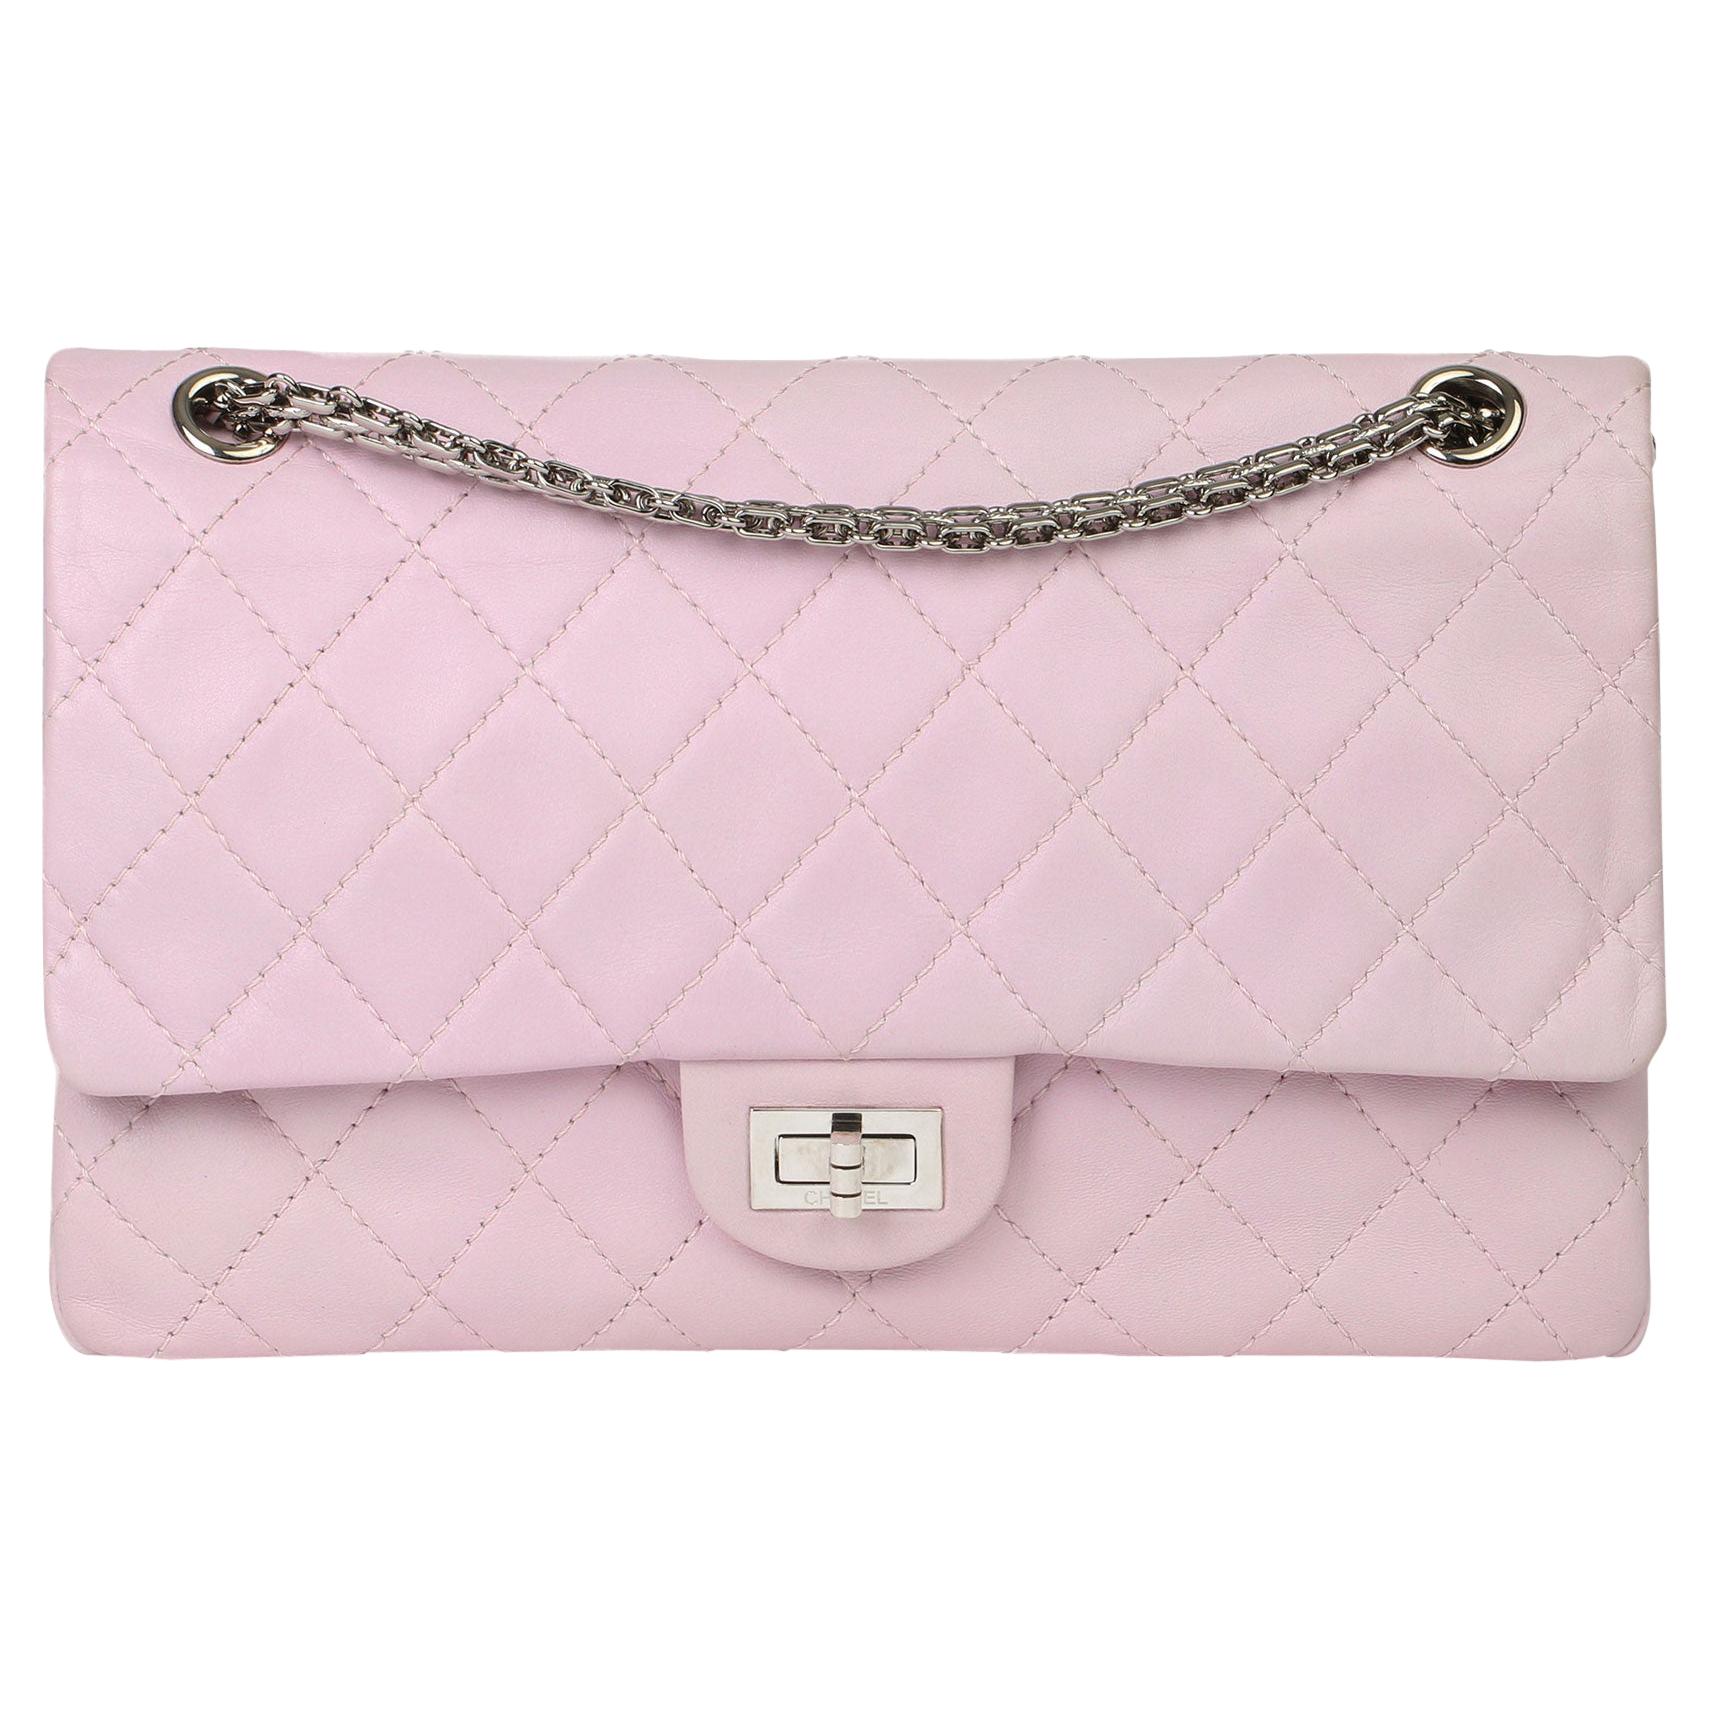 2009 Chanel Sakura Pink Quilted Lambskin 2.55 Reissue 226 Flap